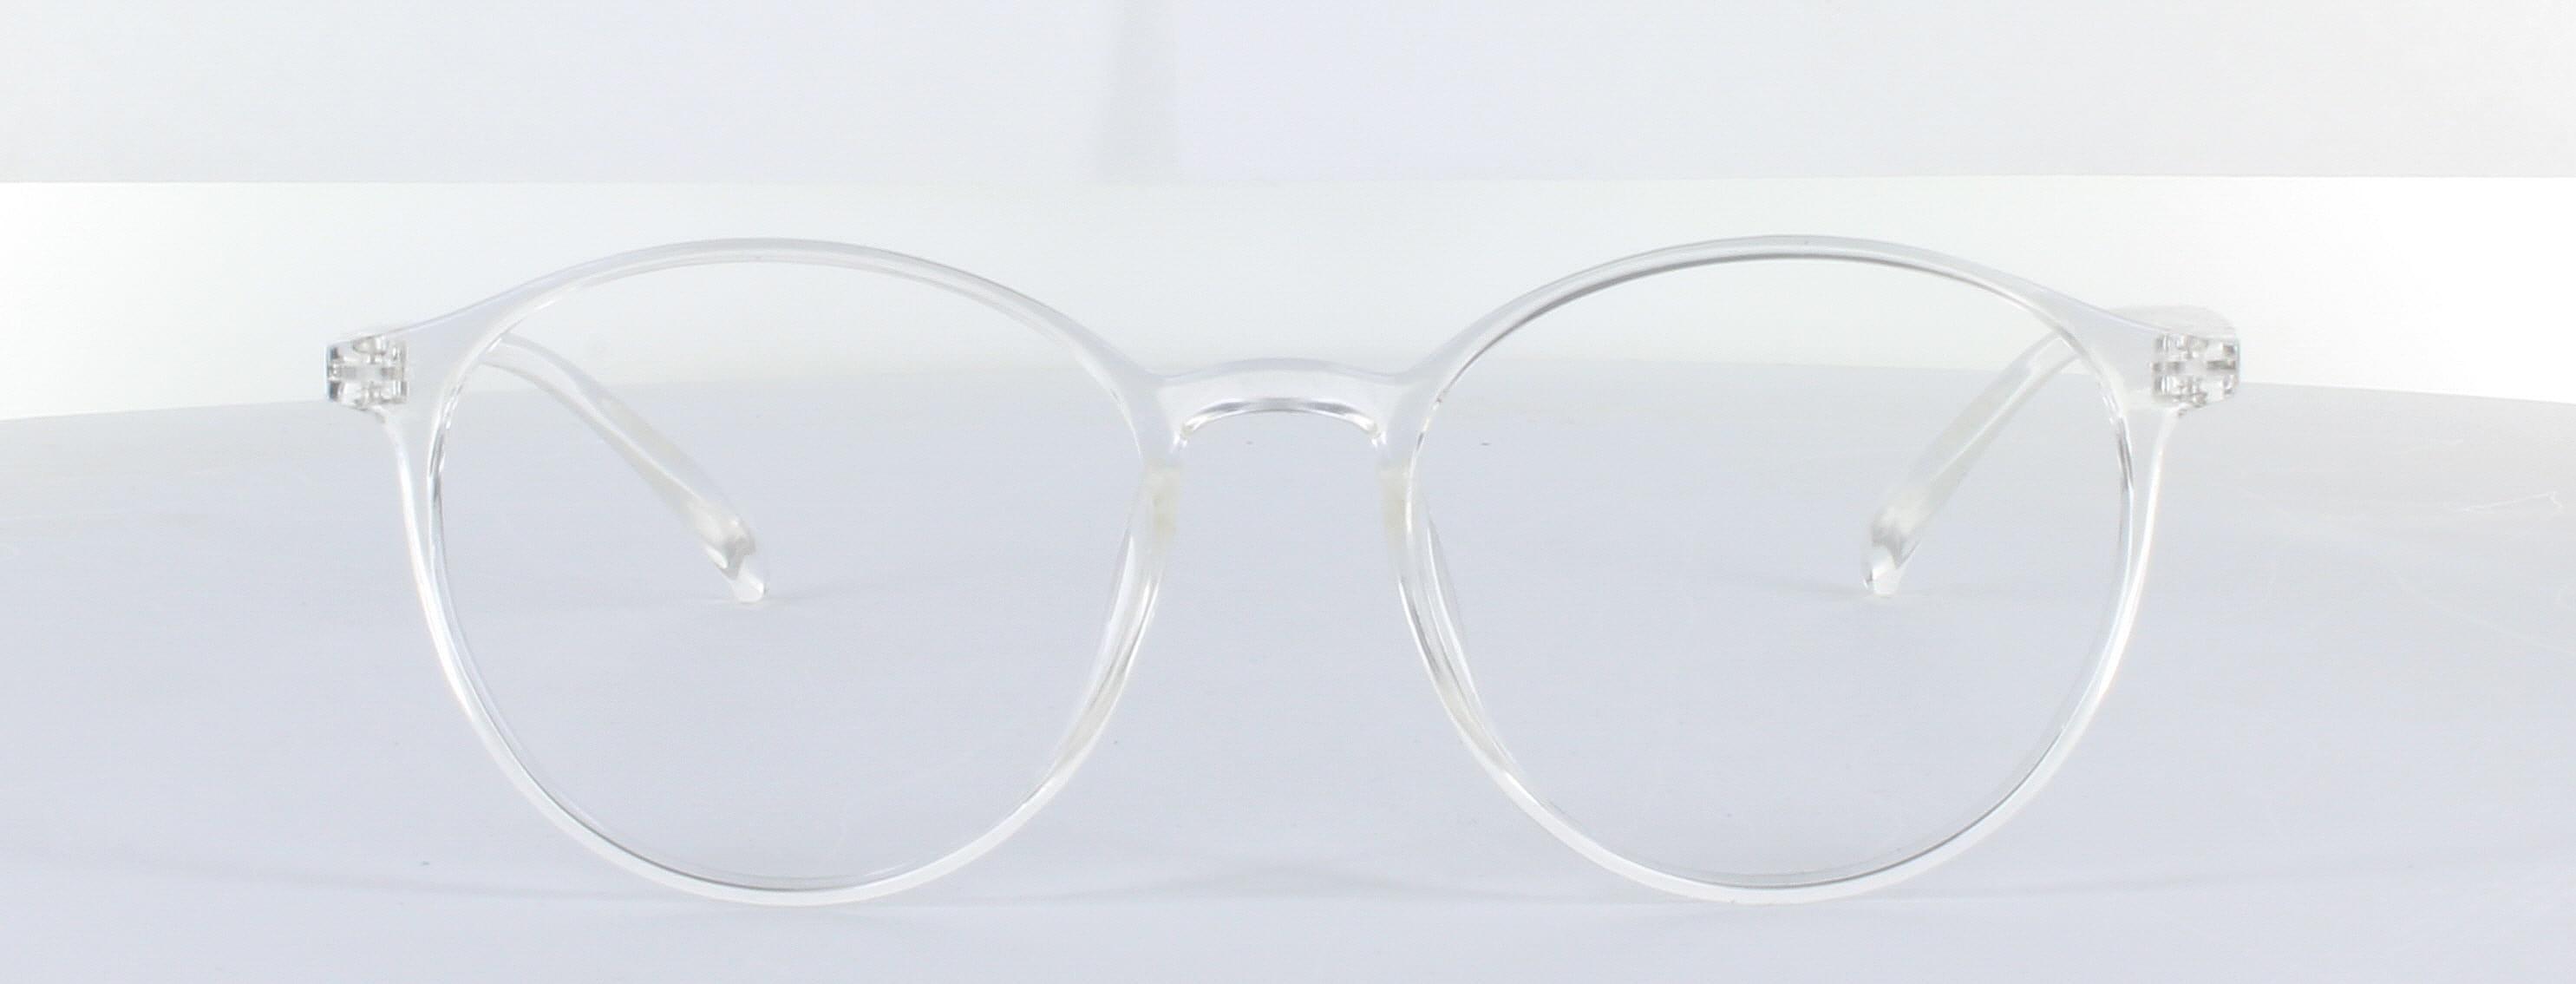 Ocushield Carson Clear Full Rim Anti Blue Light Glasses - Image View 5